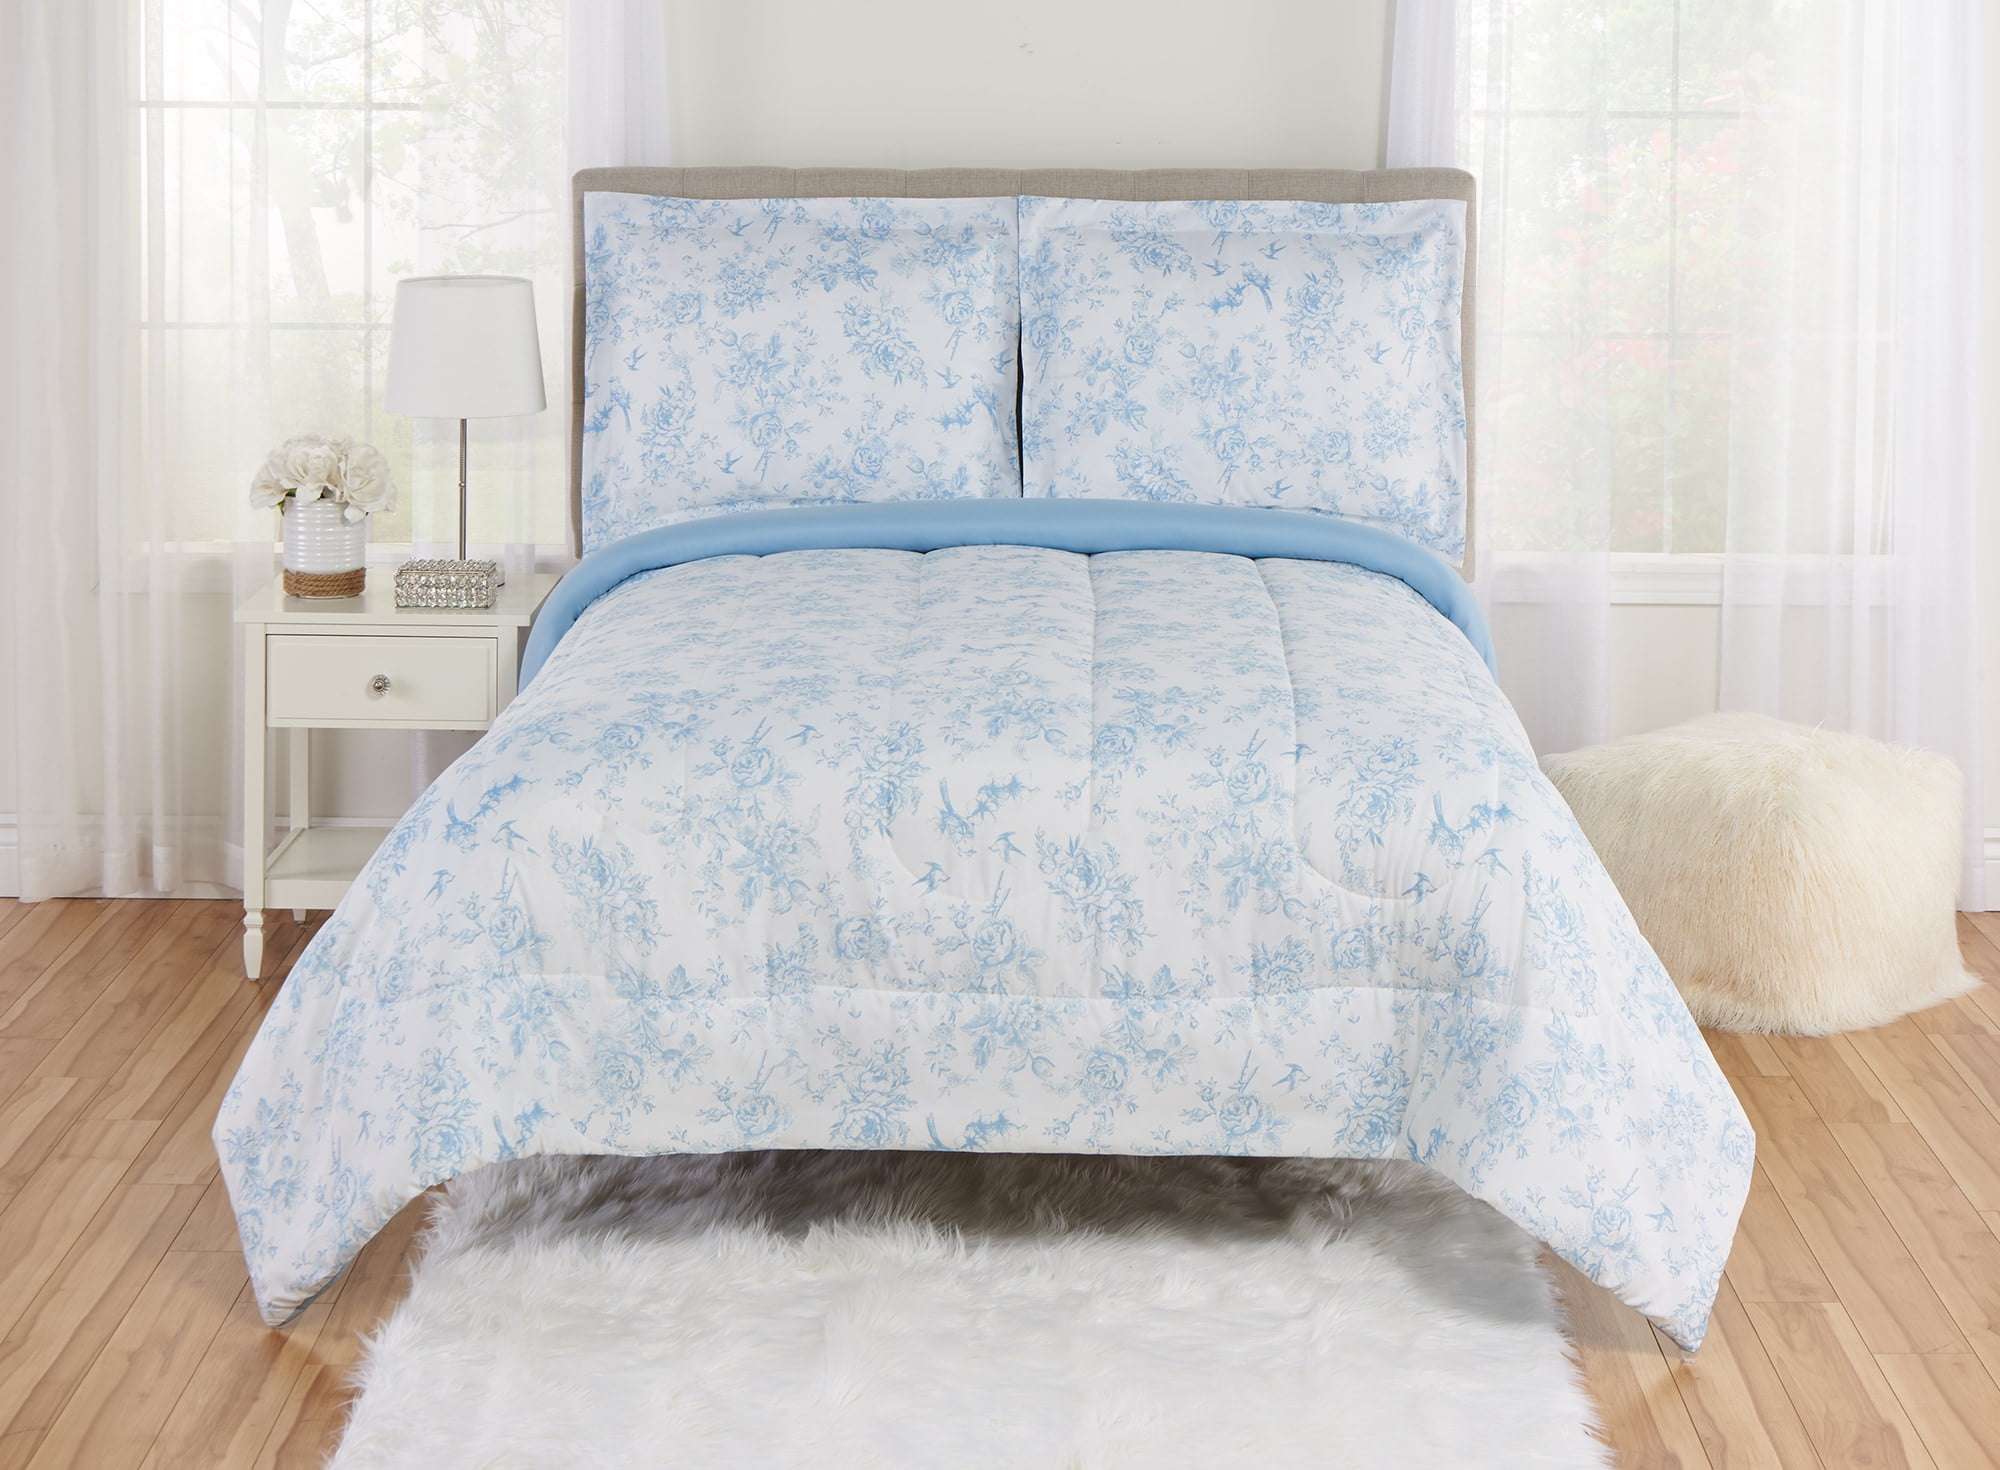 Mainstays Floral Toile Comforter And Sham Bedding Set Walmart